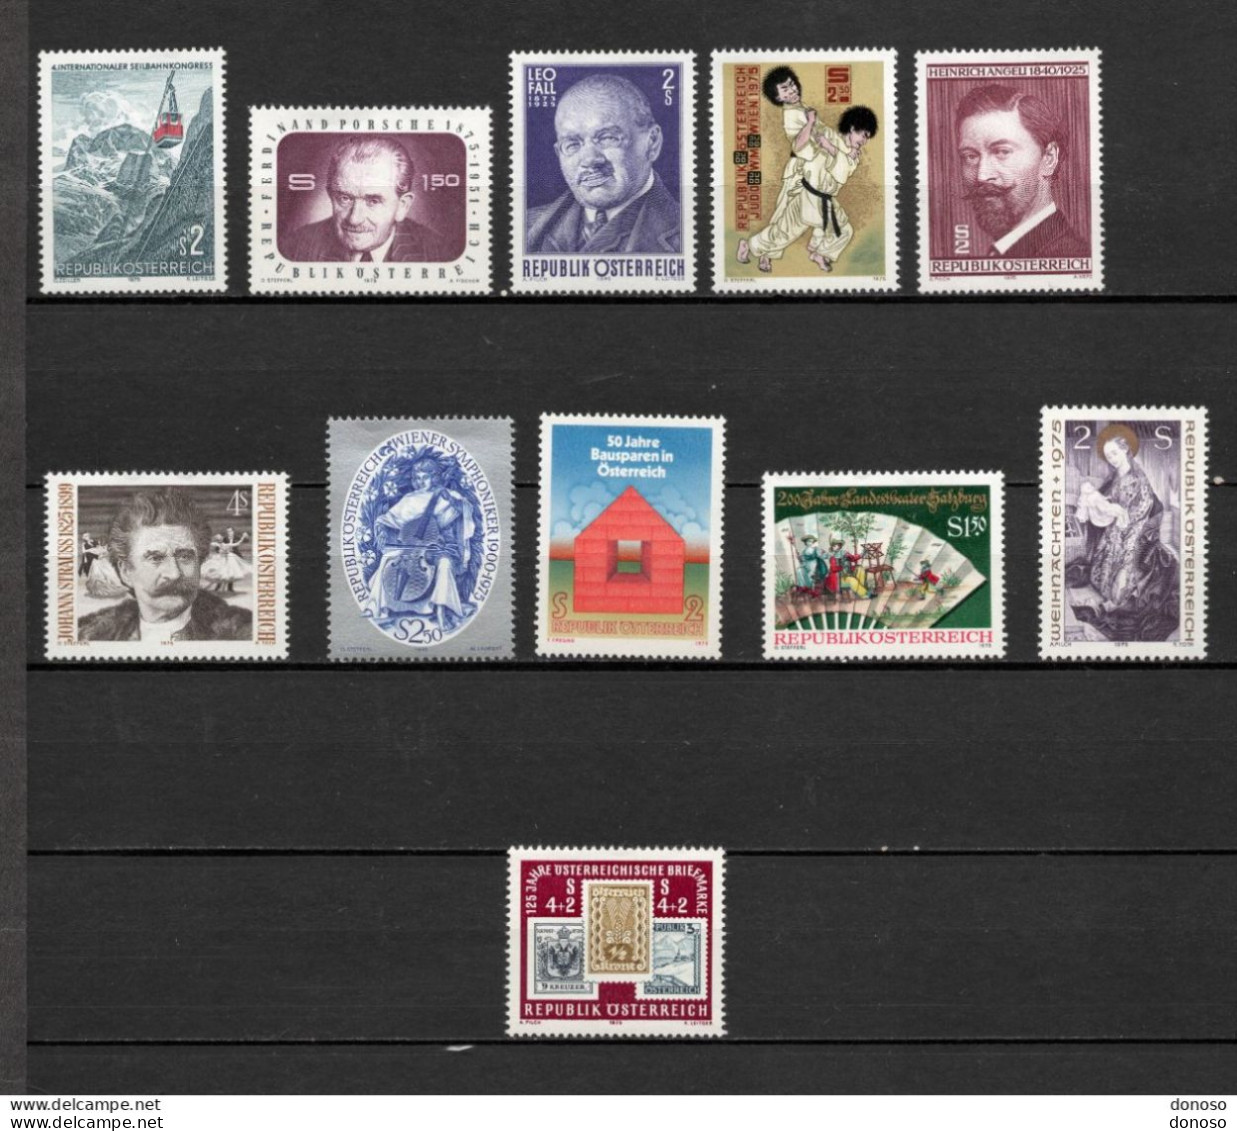 AUTRICHE 1975 Yvert 1320-1327 + 1332-1333 NEUF** MNH Cote 8,10 Euros - Unused Stamps